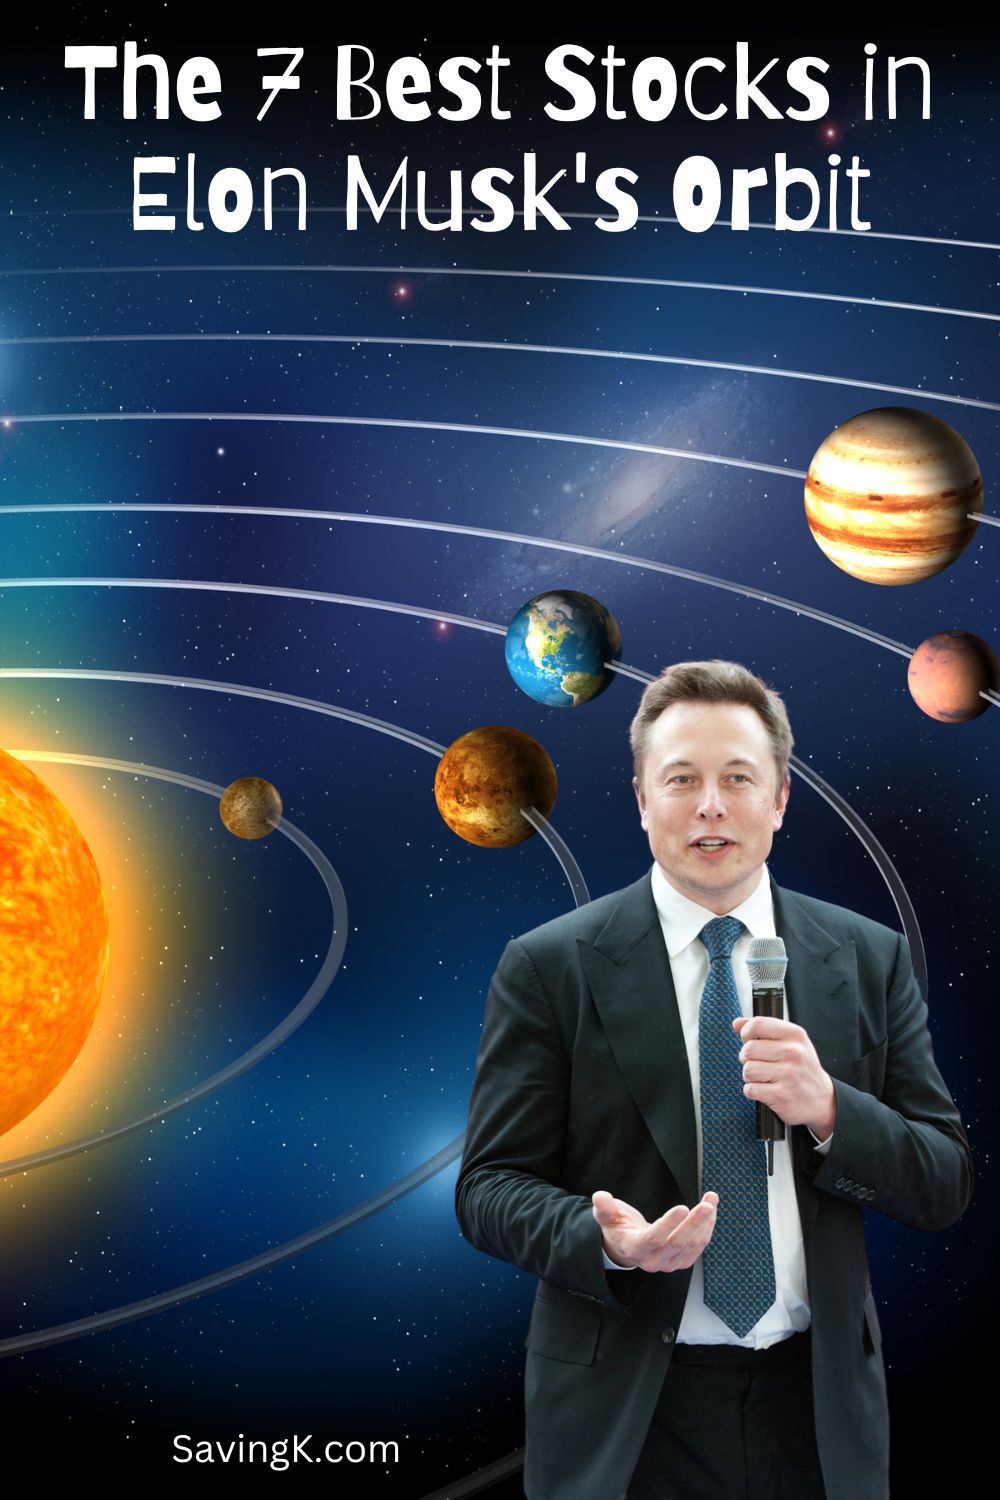 The 7 Best Stocks in Elon Musk's Orbit